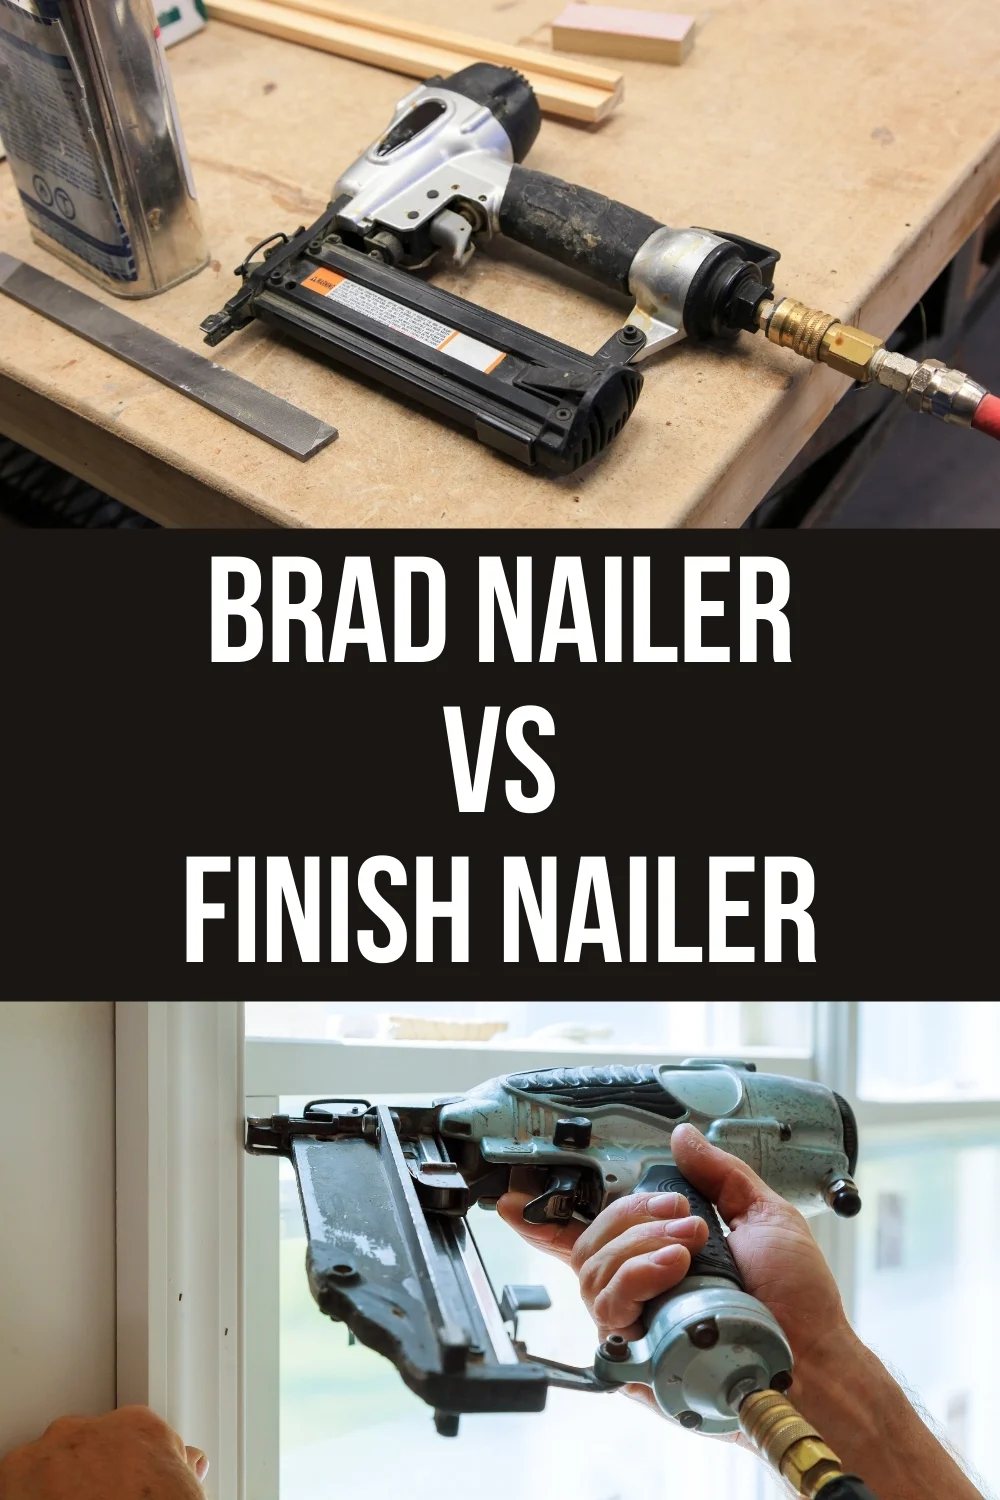 What Is a Brad Nail?